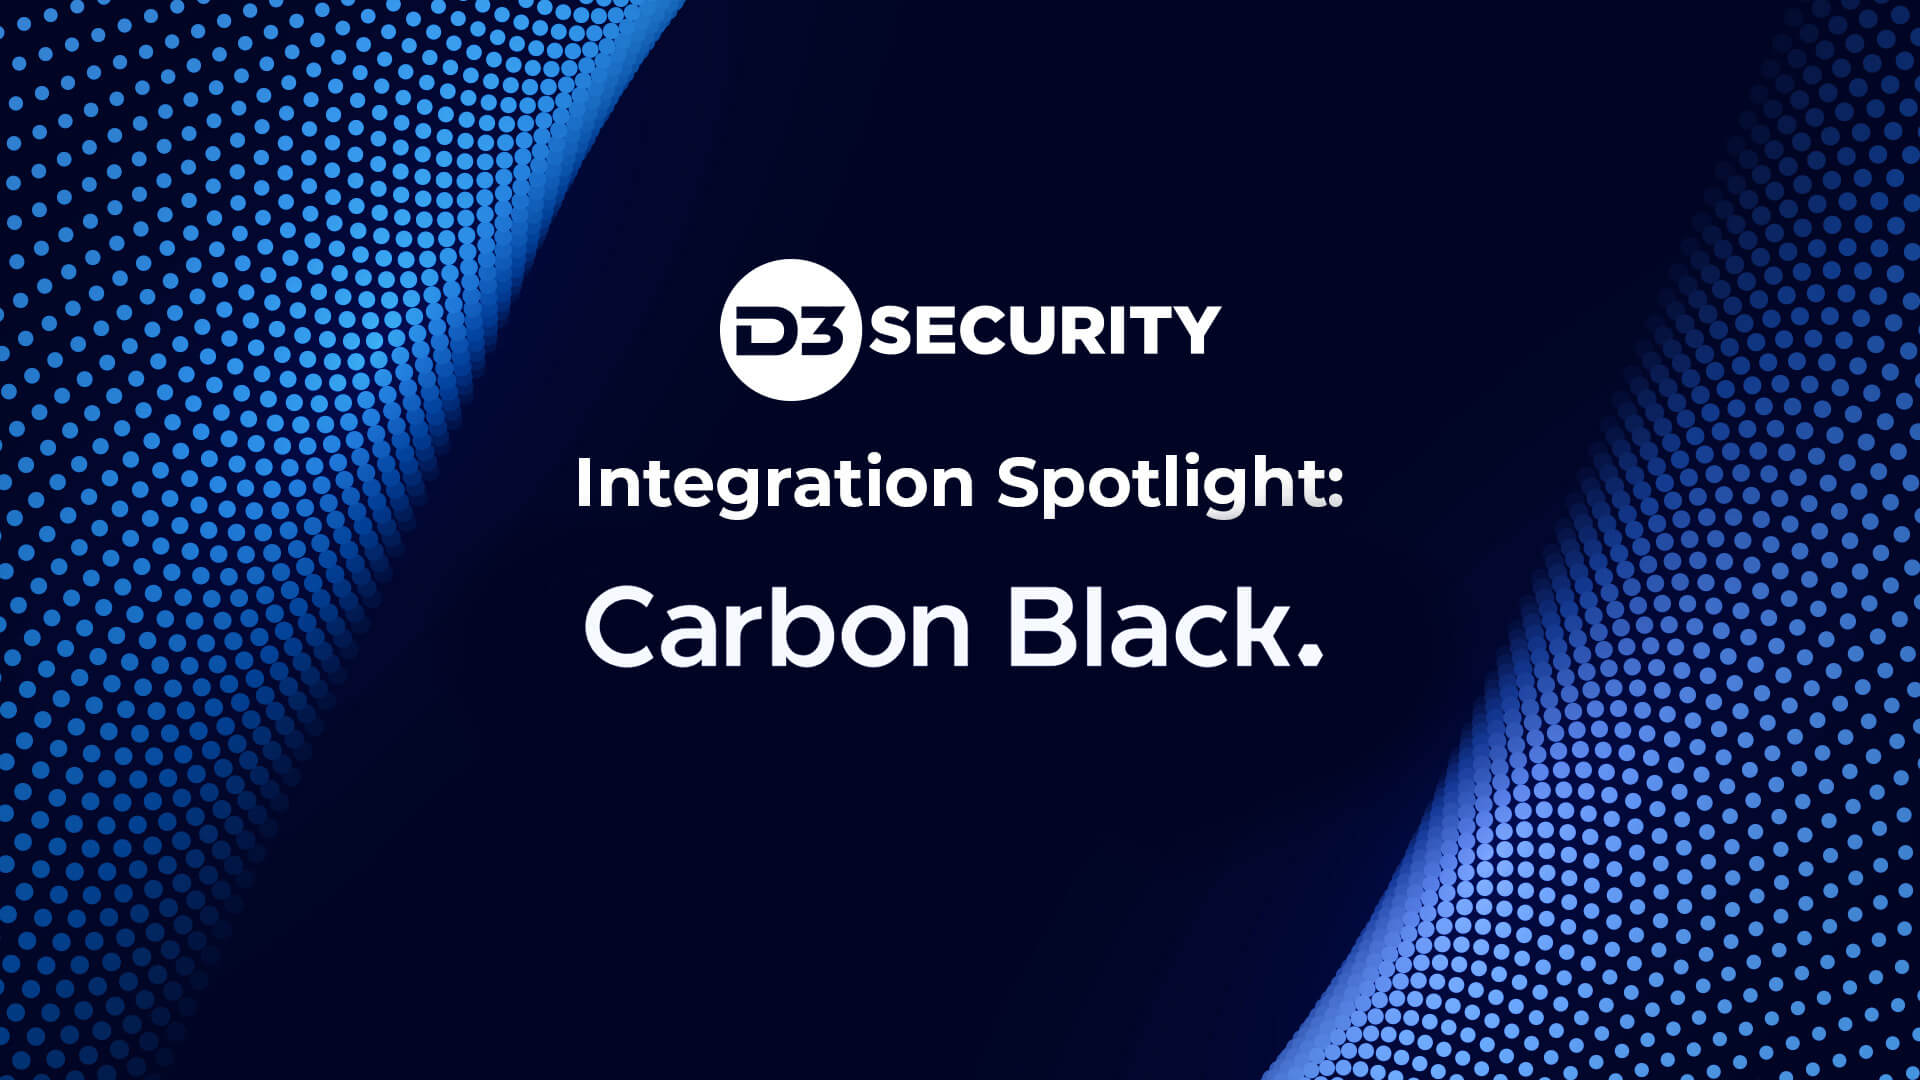 Why D3 Smart SOAR is the Best SOAR for Carbon Black